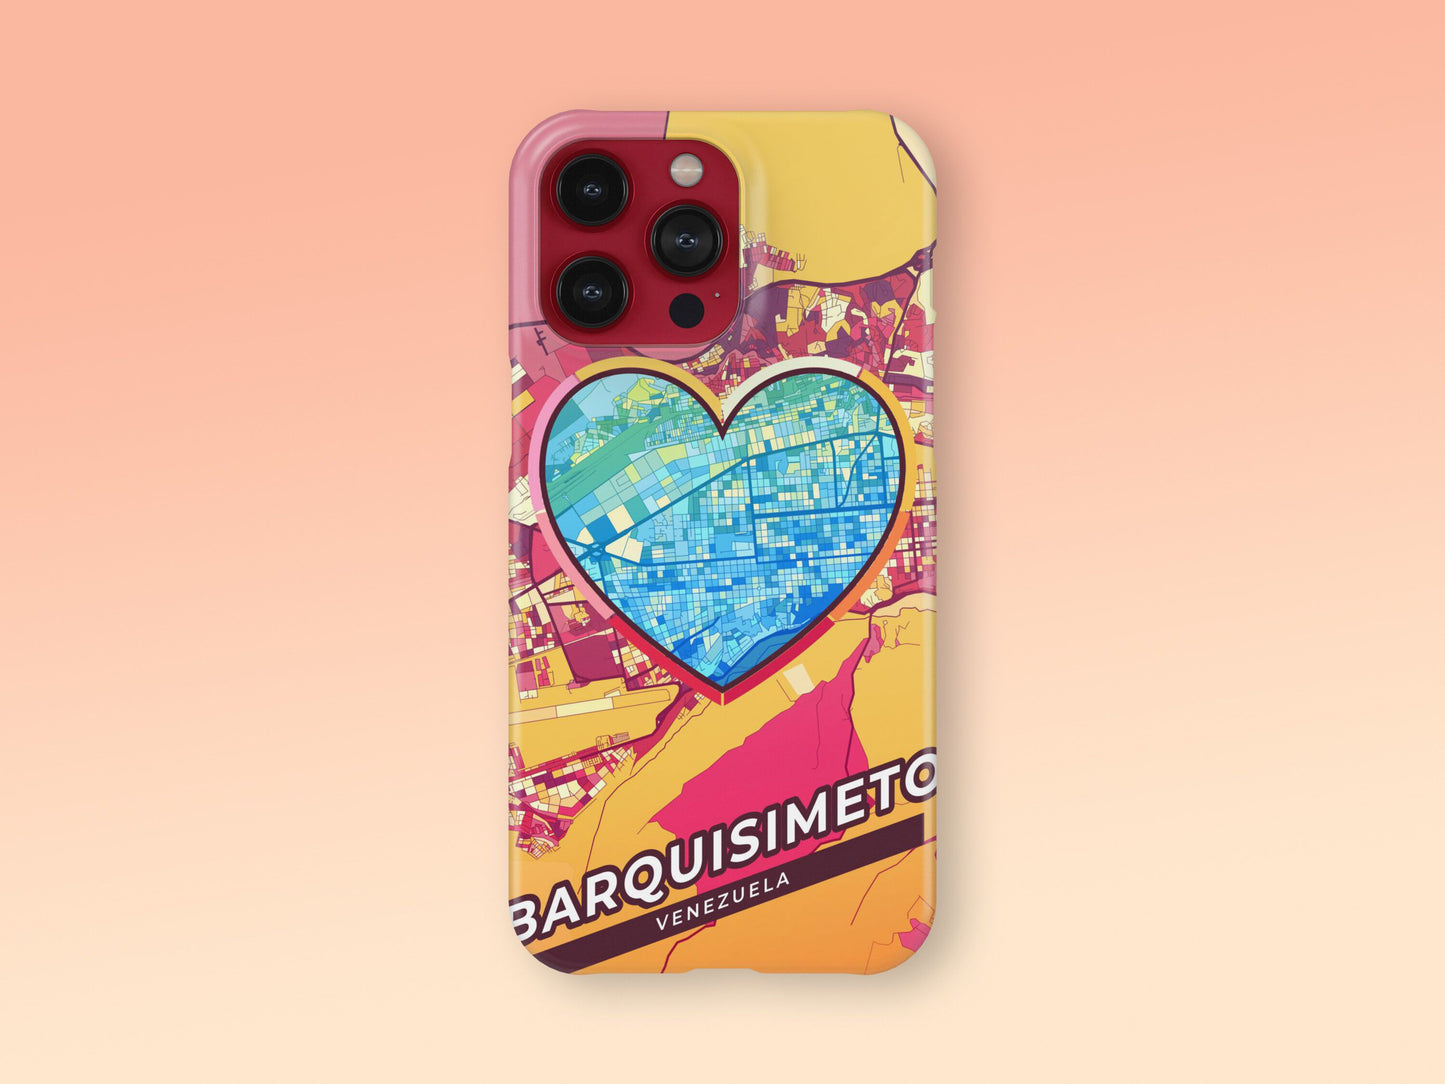 Barquisimeto Venezuela slim phone case with colorful icon. Birthday, wedding or housewarming gift. Couple match cases. 2